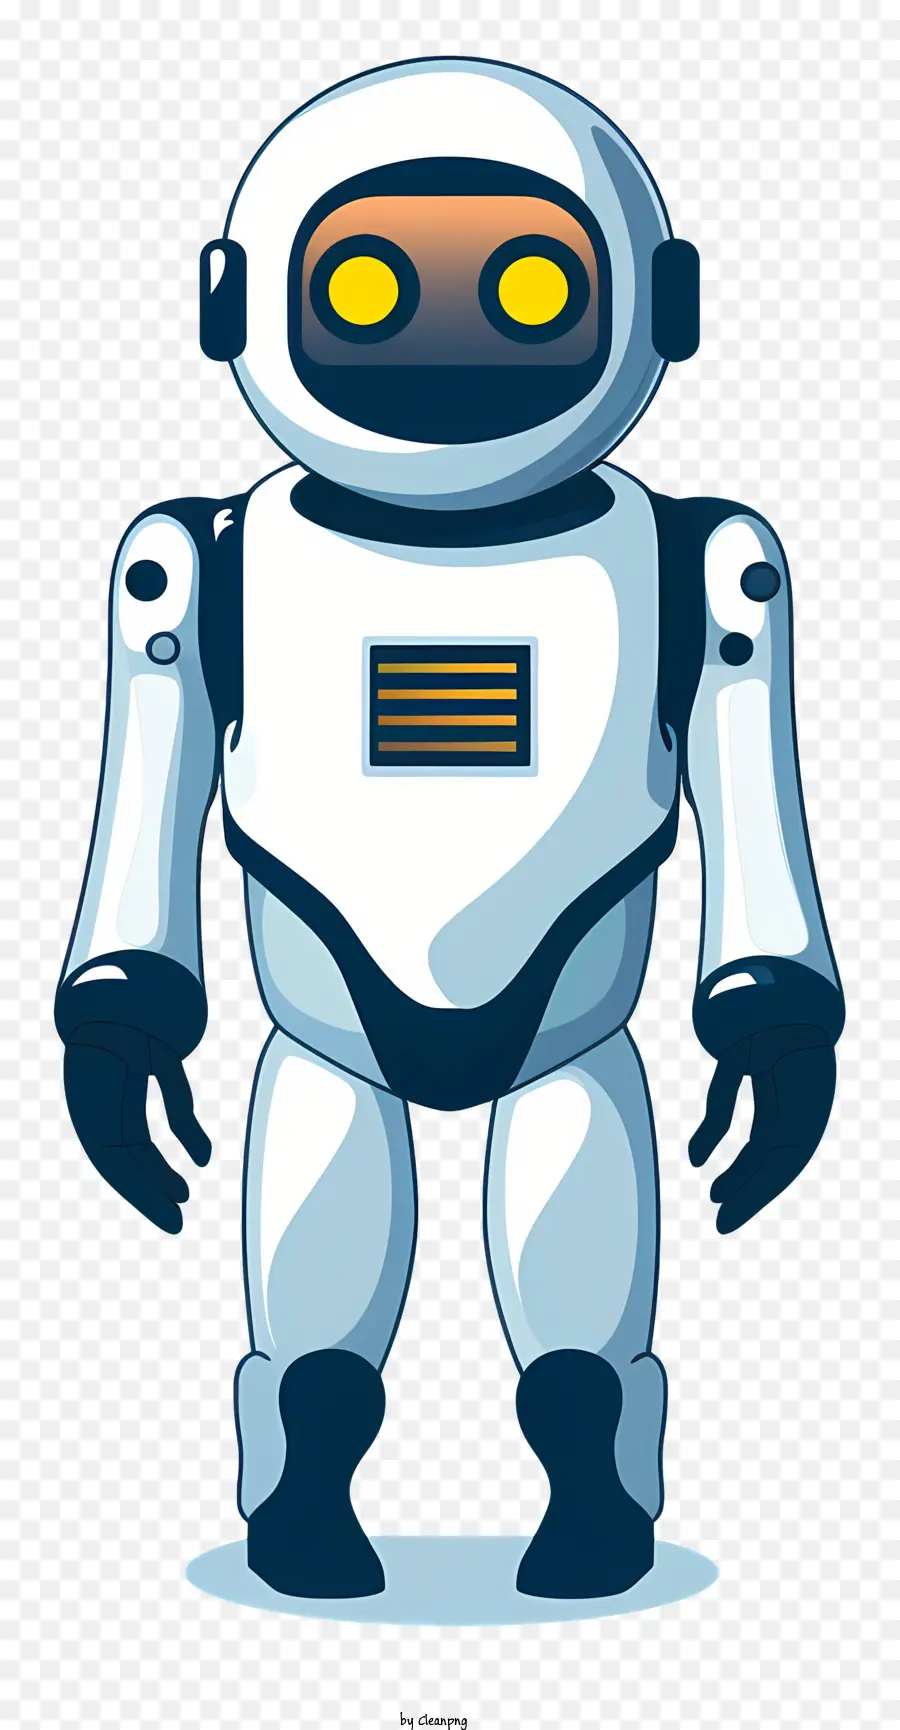 Robot Humanoid Technology Science Fiction Cartoon Carattere - Robot umanoide con cartoni animati con occhi gialli e espressione seria